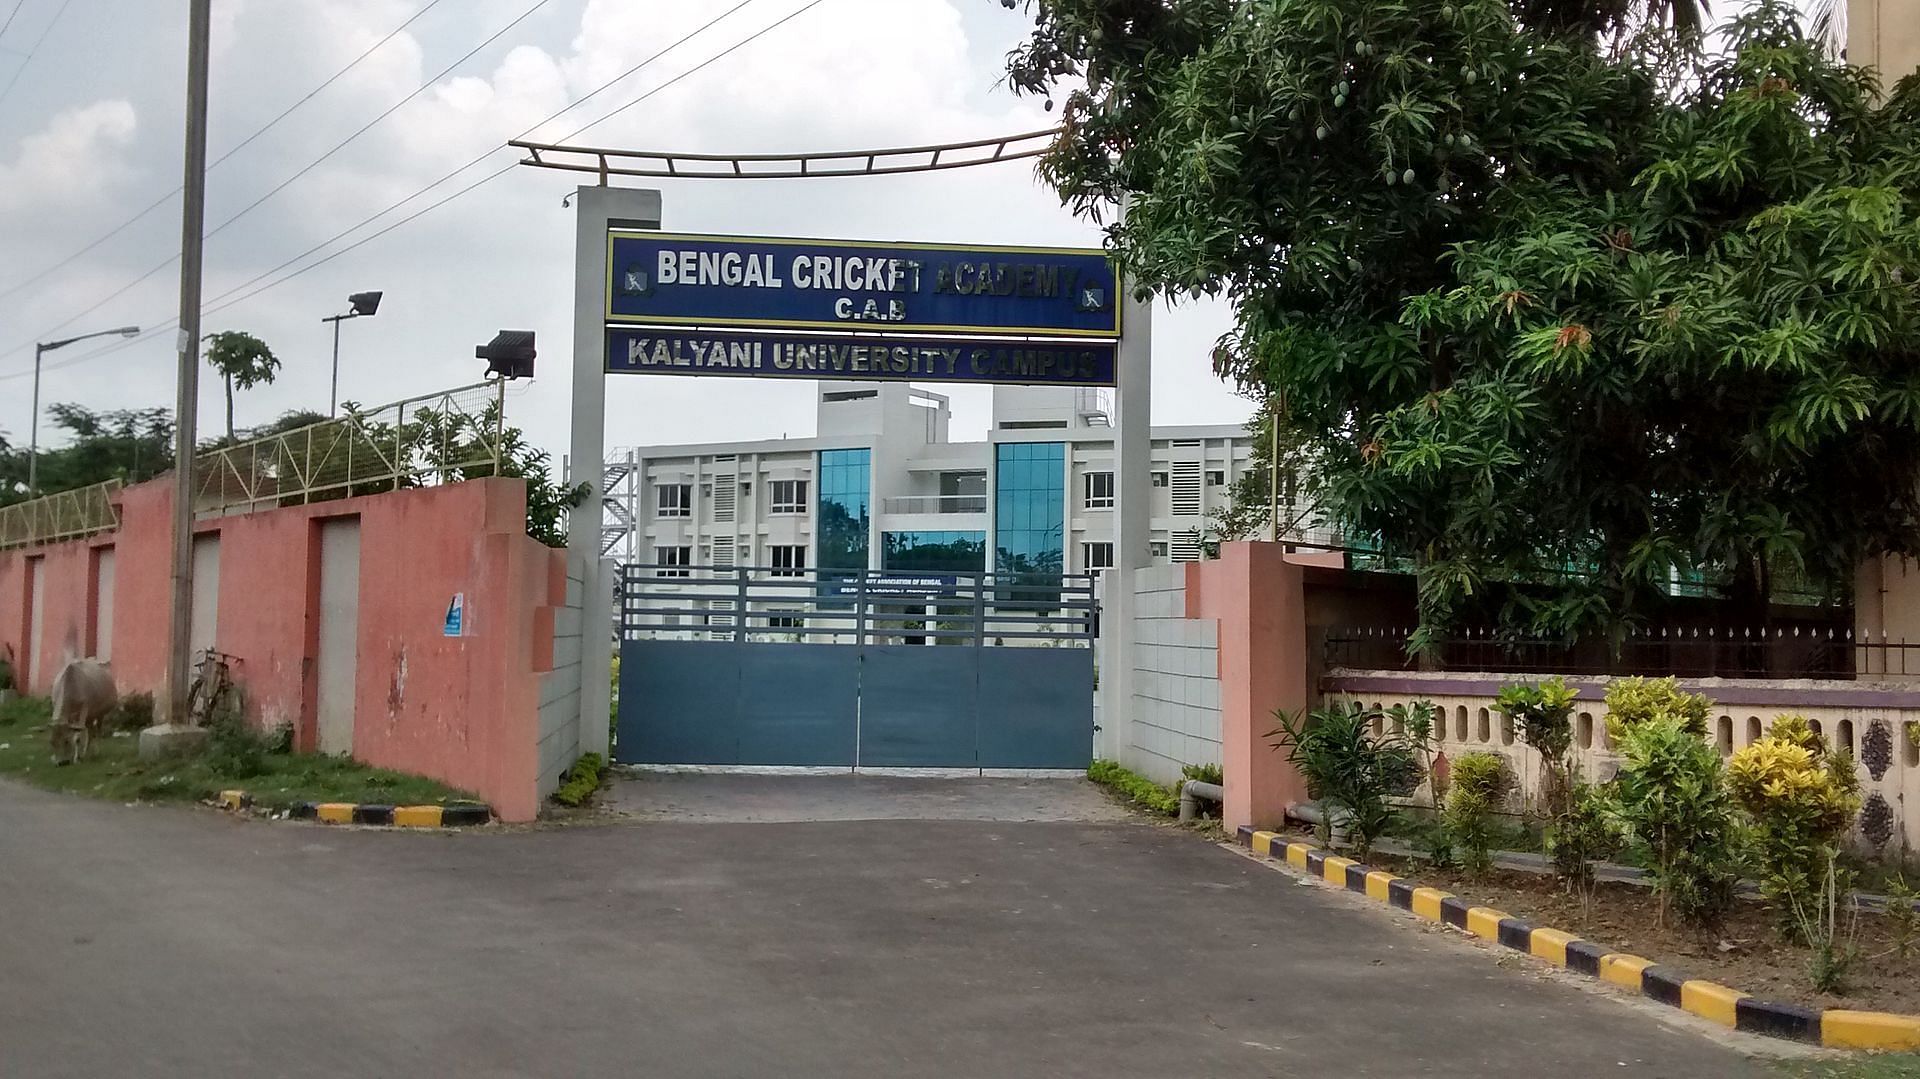 The BCA Cricket Academy in Kalyani (Source: Wikipedia)